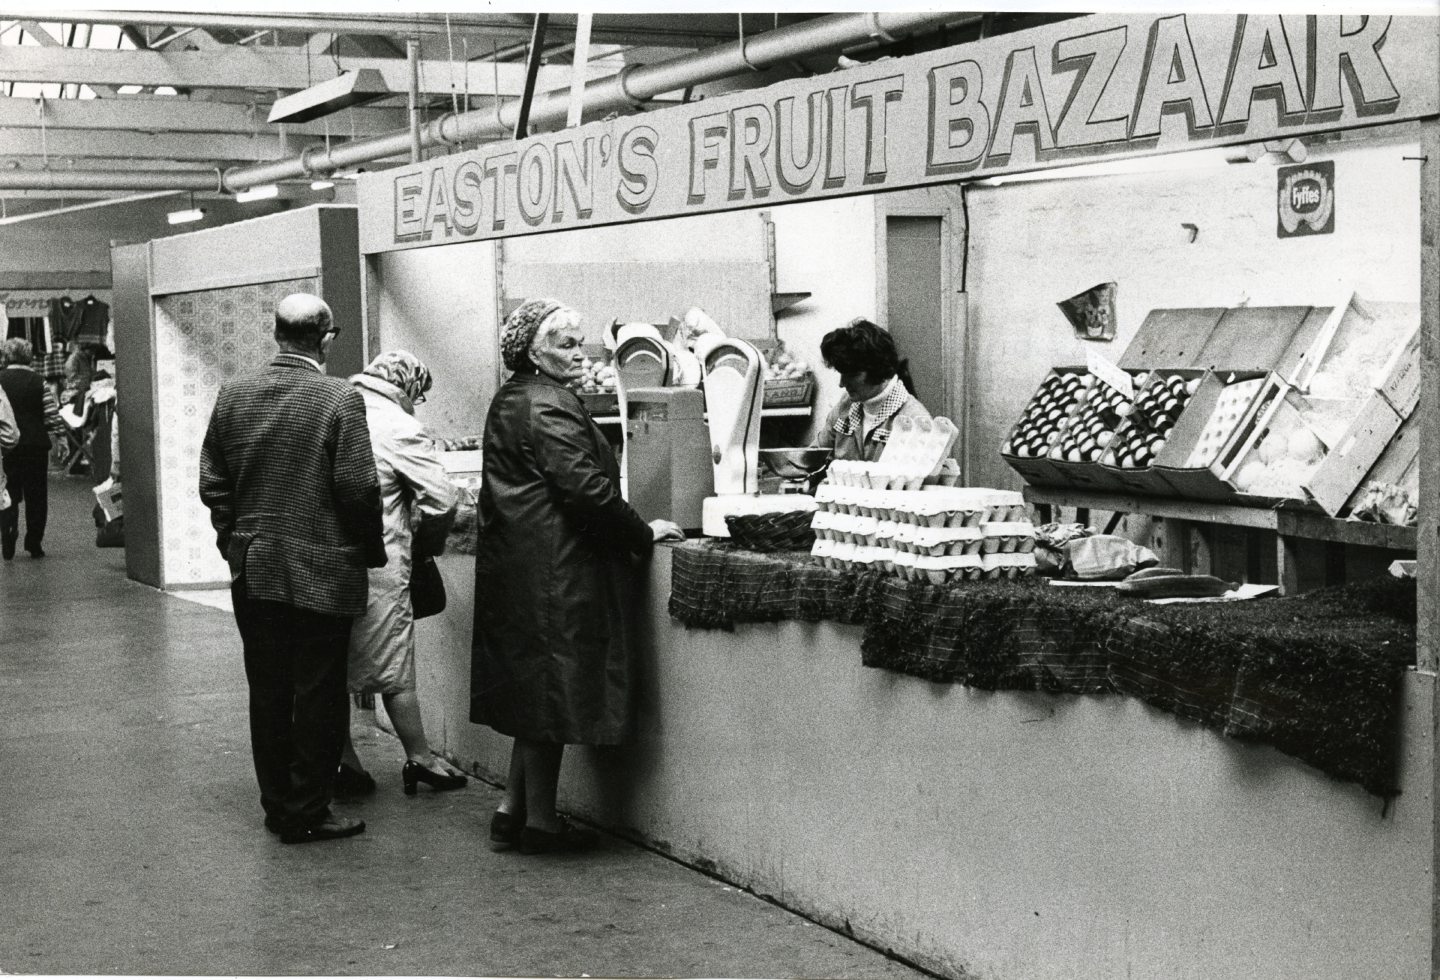 Easton's Fruit Bazaar was among the popular stalls.